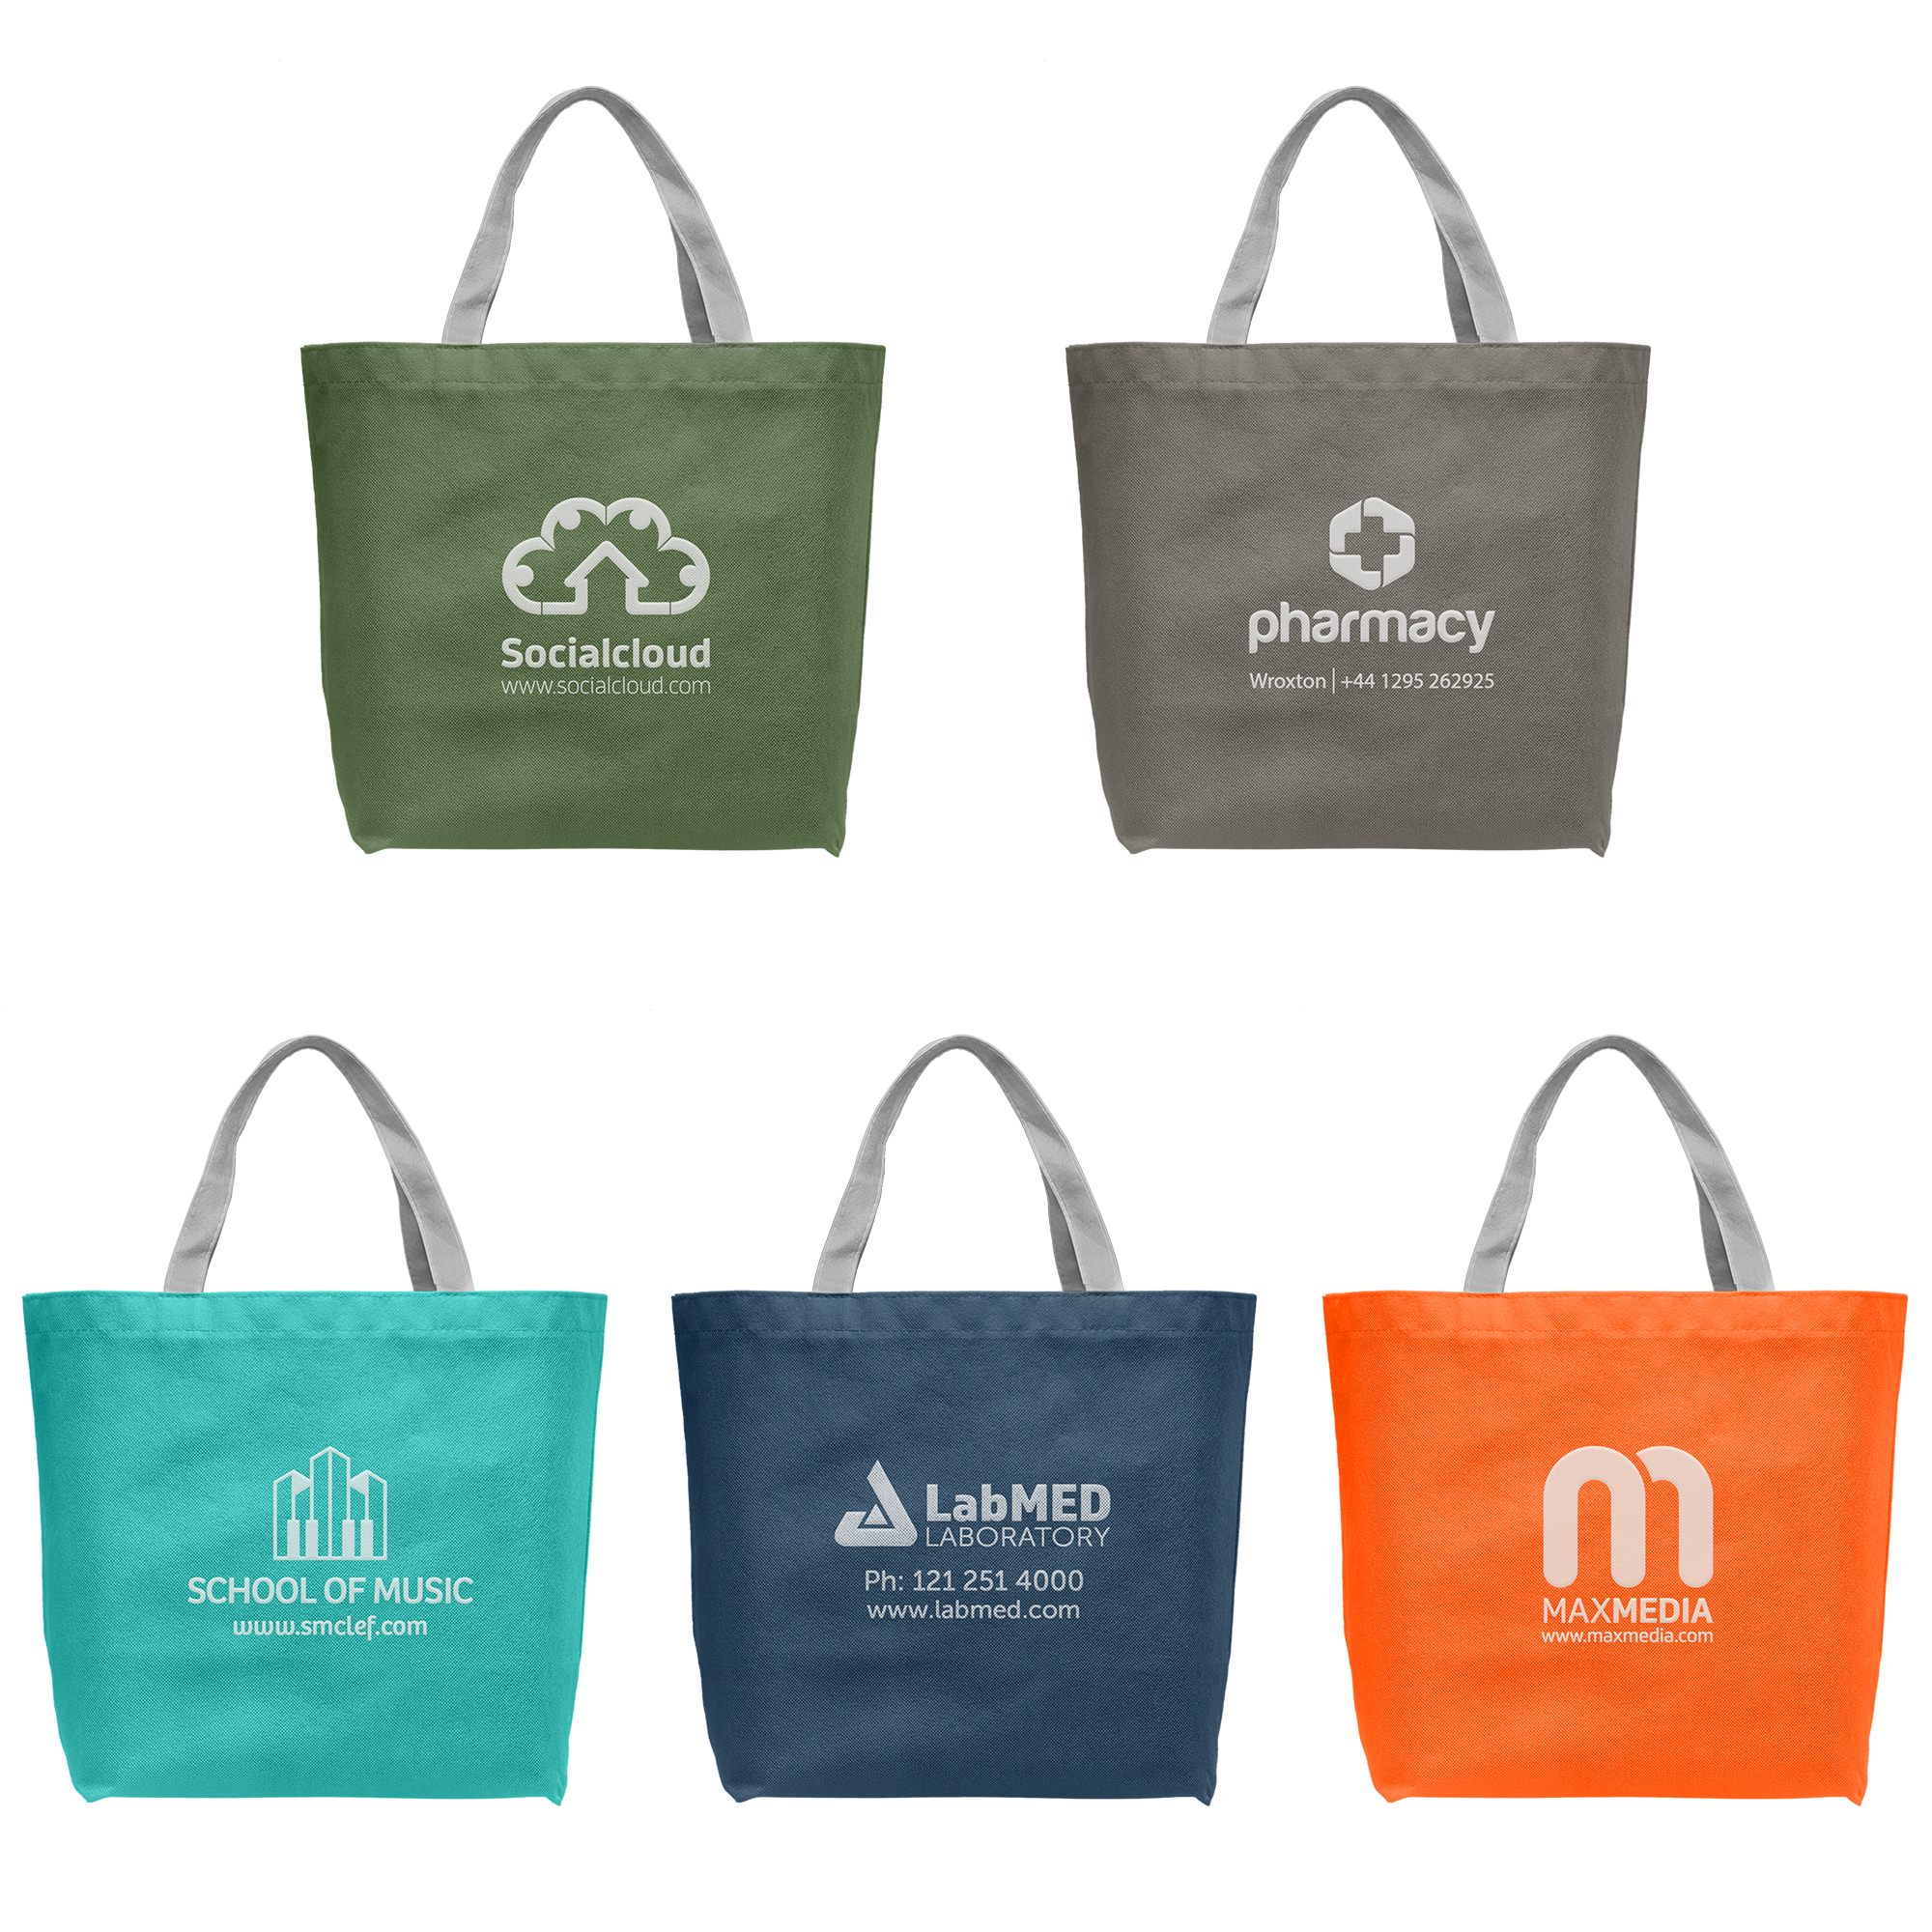 Custom Logo Tote Bag, Personalized Custom Text Totes, Reusable Shoppin –  Kasey Danielle Designs